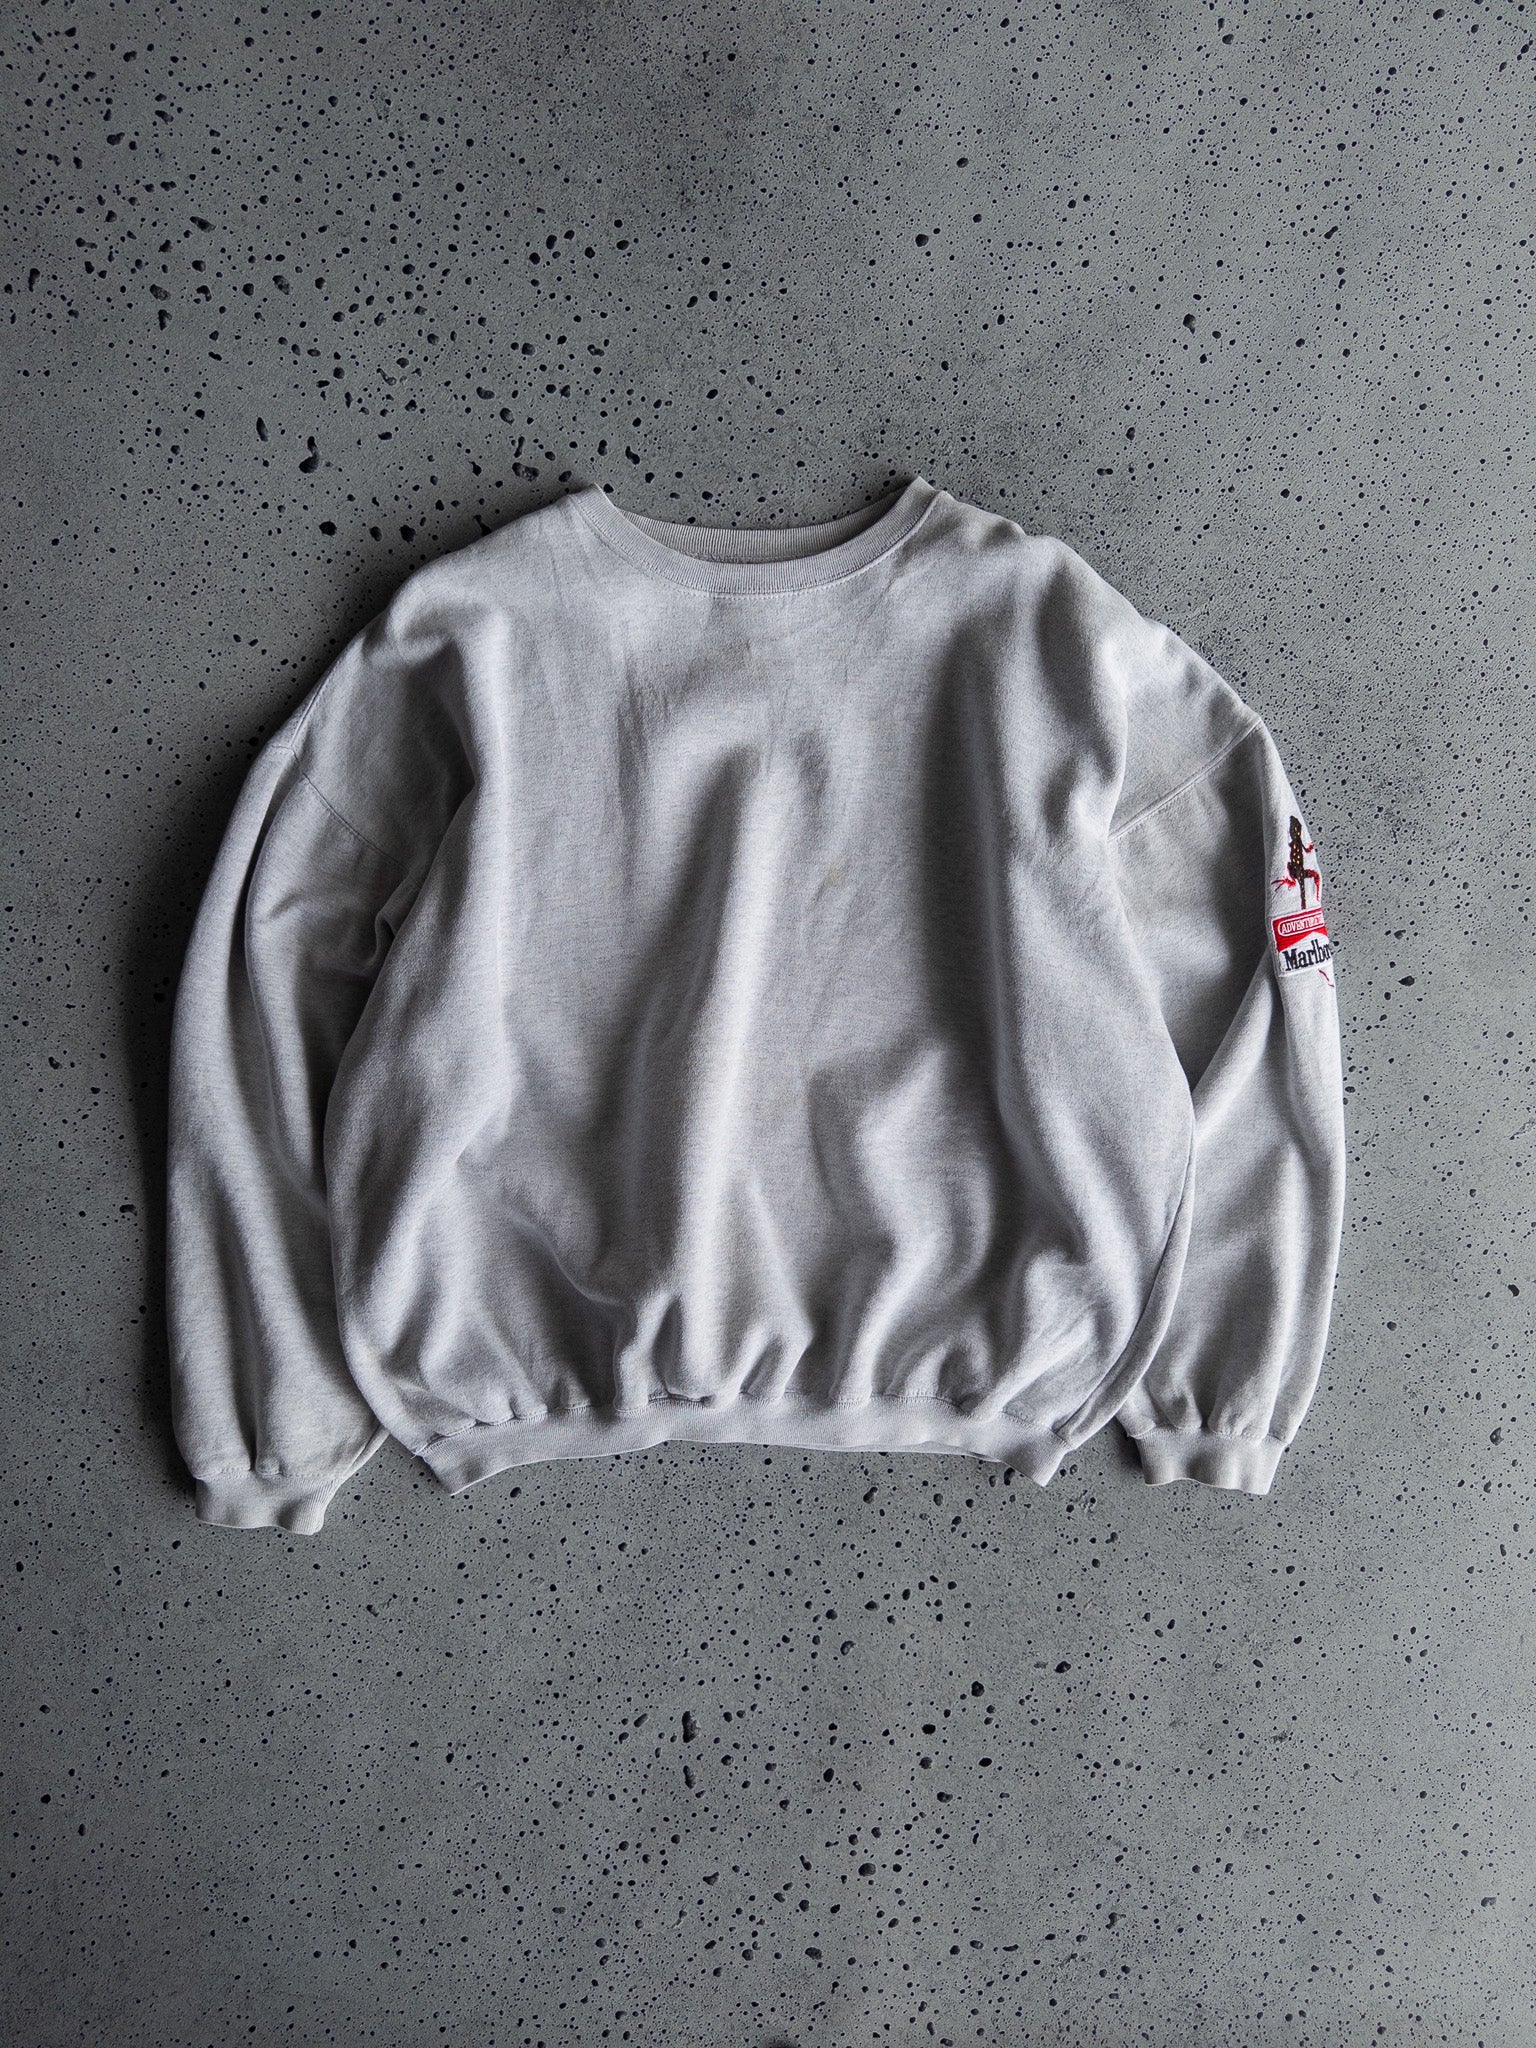 Vintage Marlboro Sweatshirt (XL)